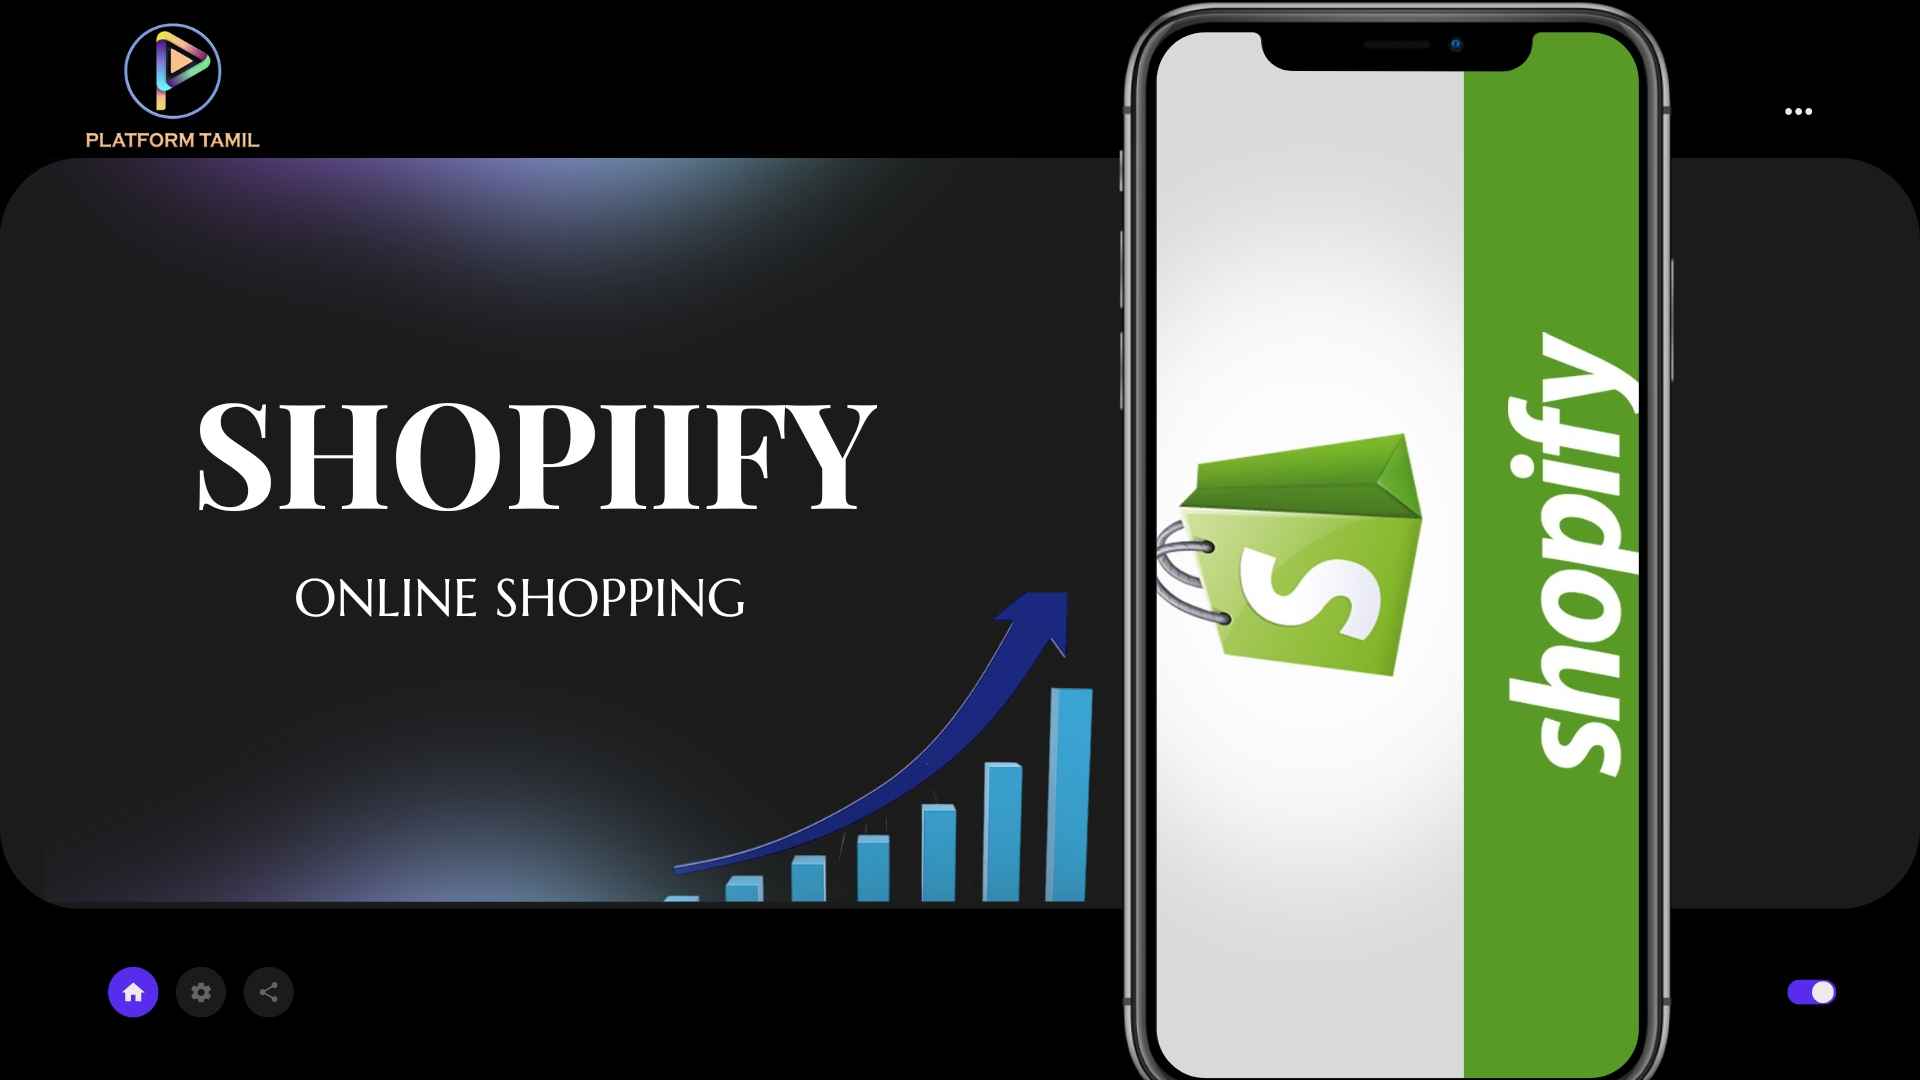 Shopify - Platform Tamil